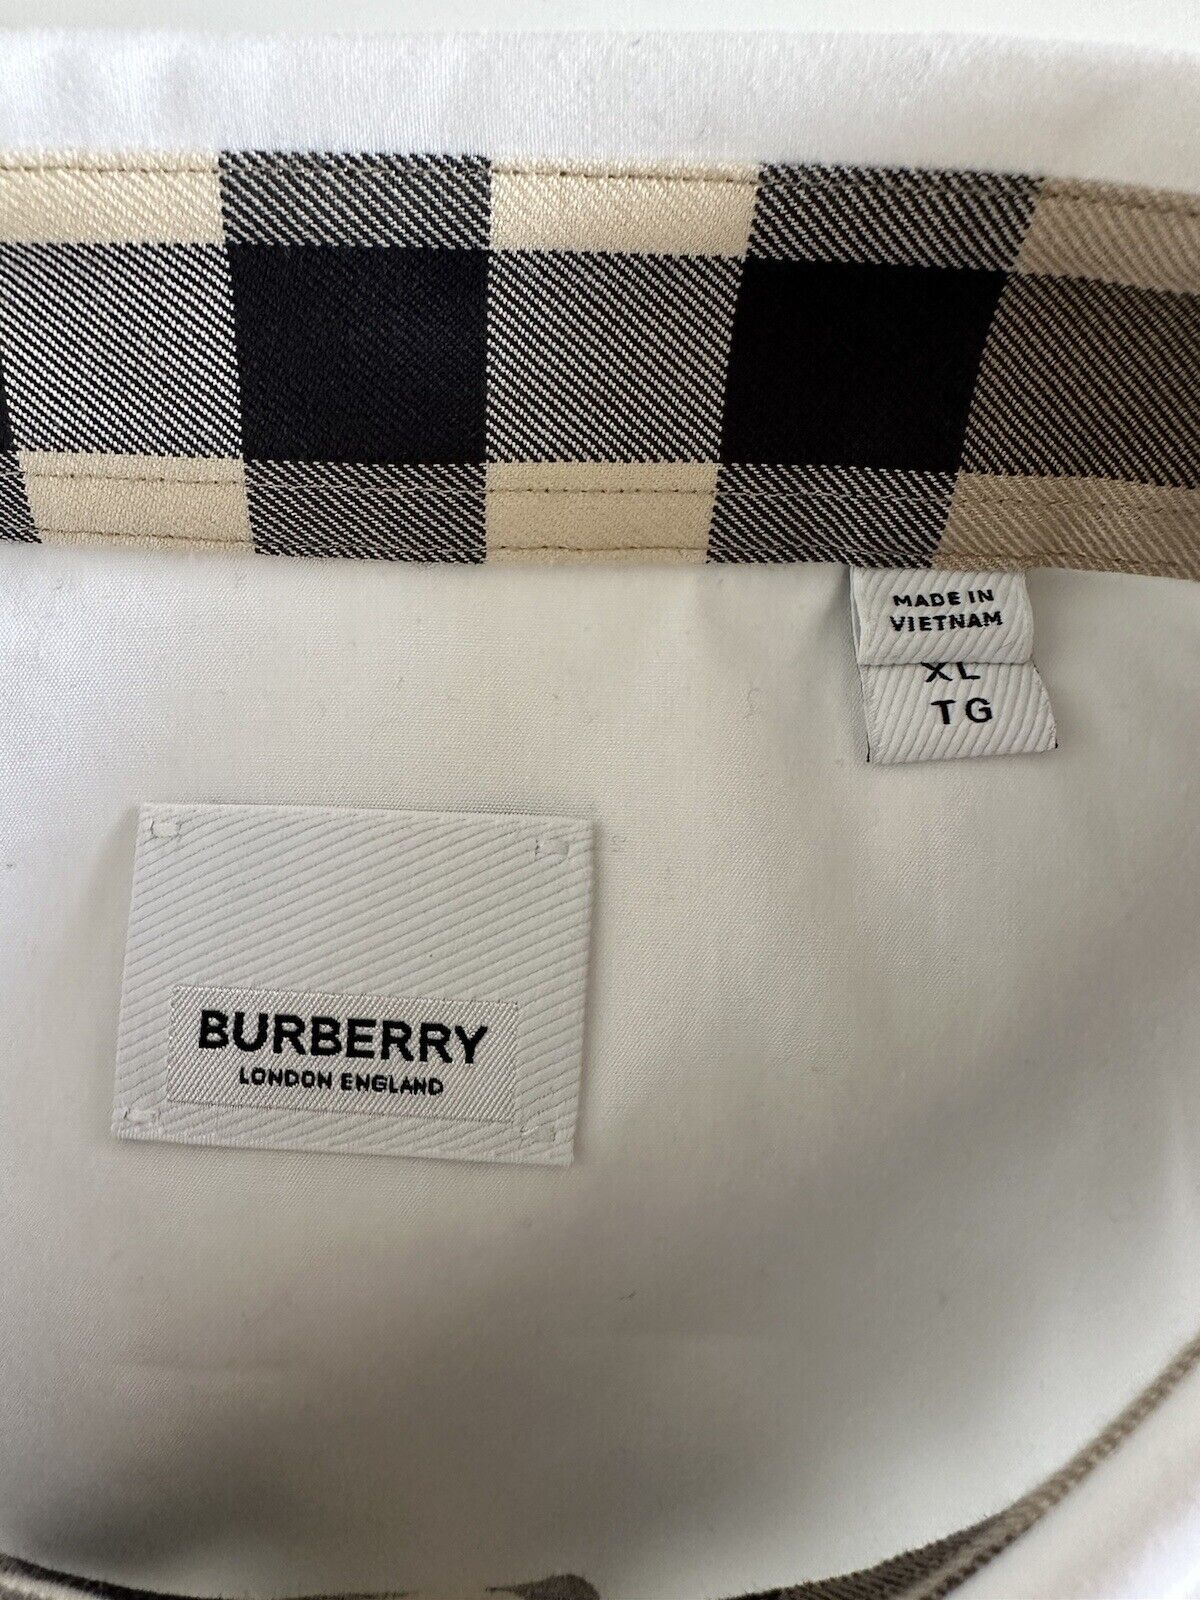 NWT $530 Burberry Cambridge Men's White Cotton Button-Up Shirt XL 8066768